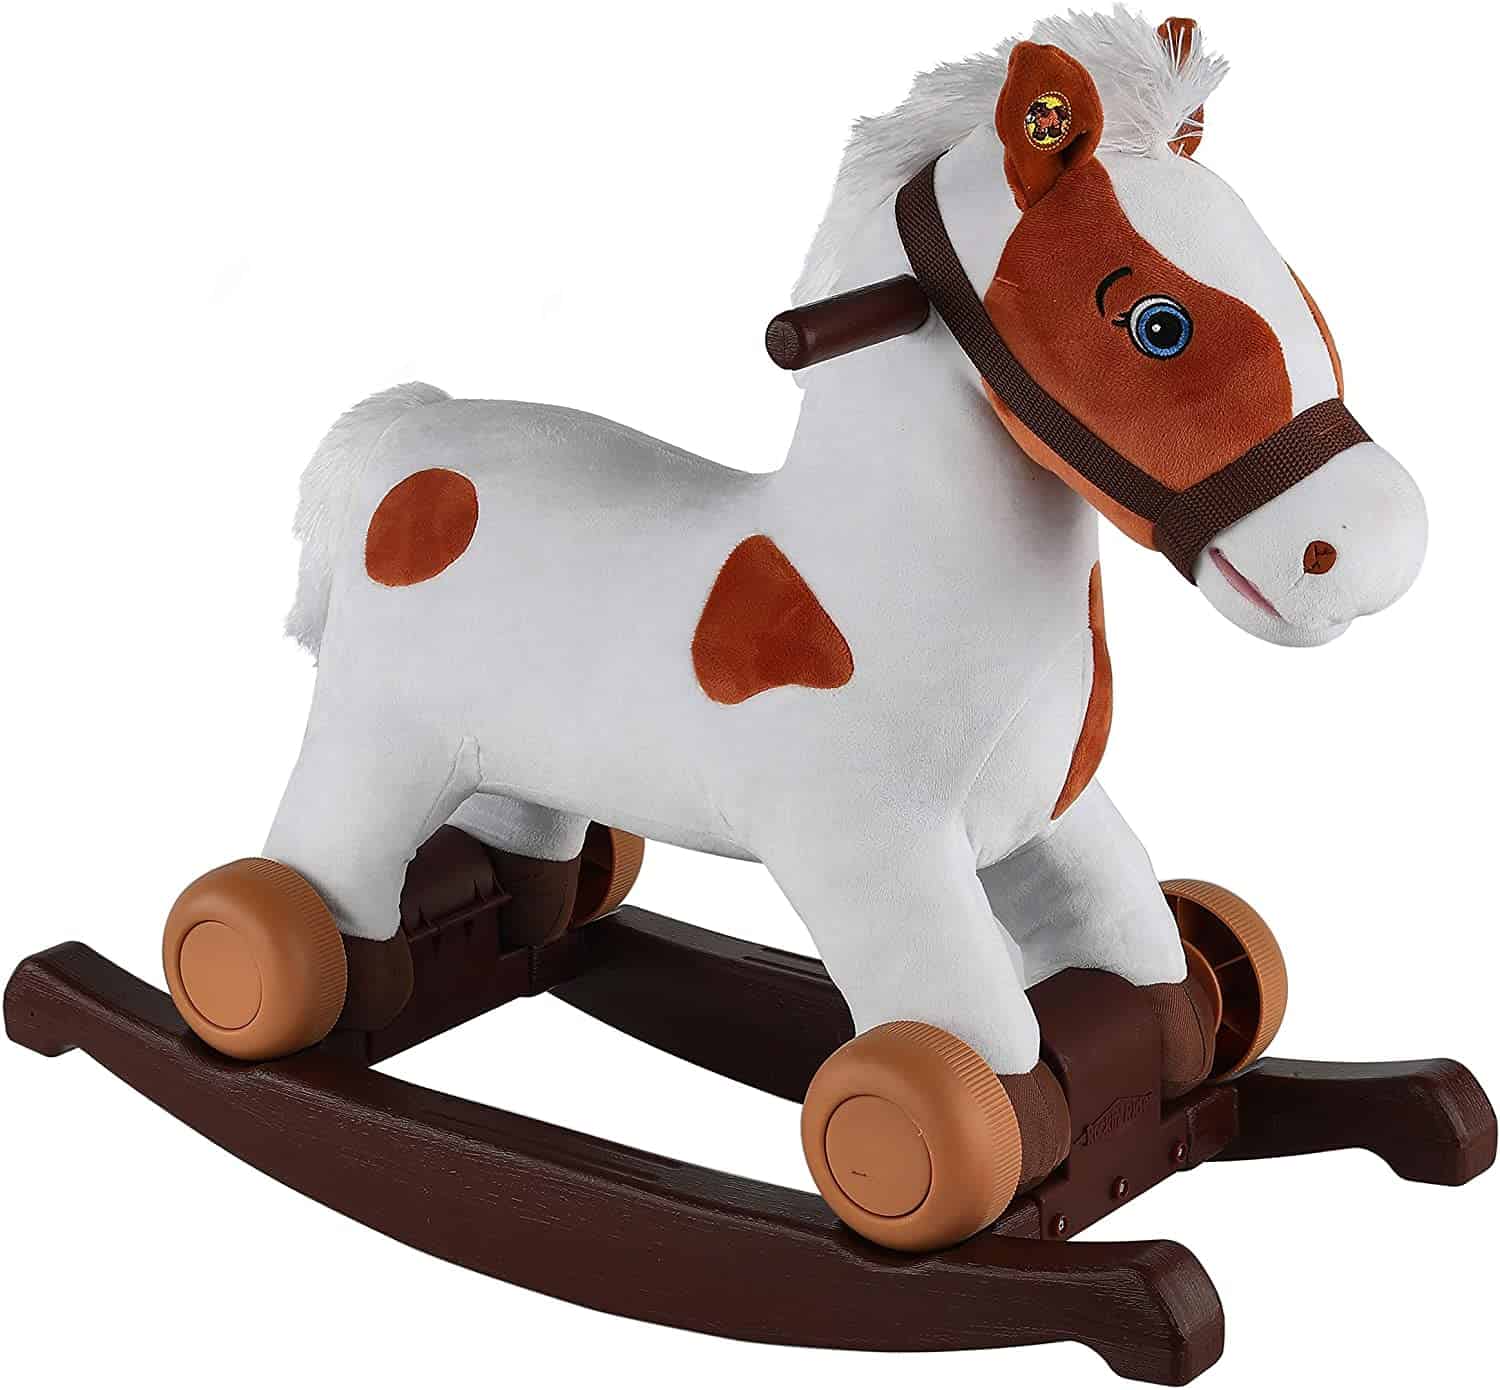 Rockin’ Rider Carrot 2-in-1 Pony Plush Ride-On